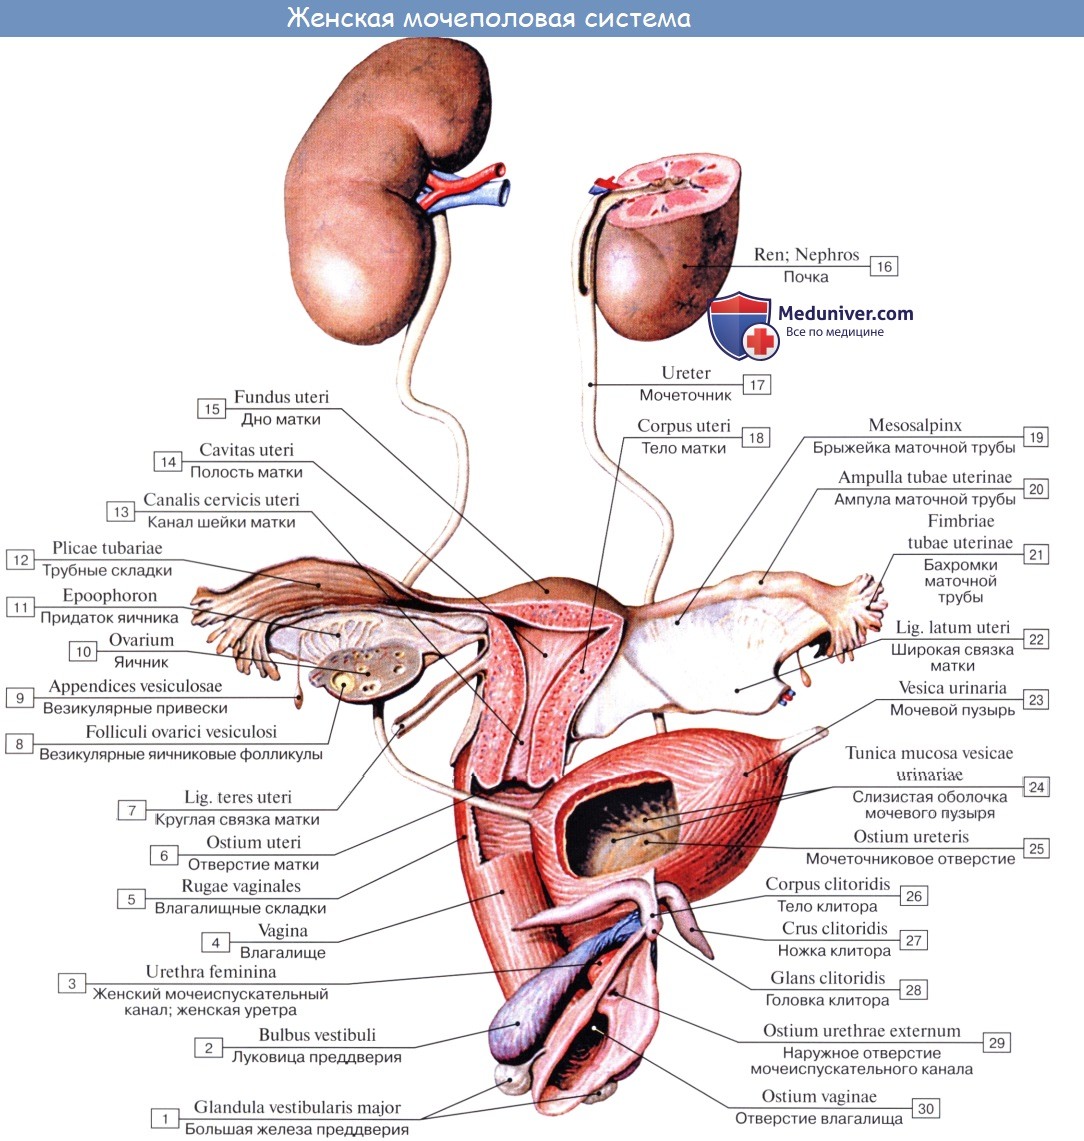 :  , systema urogenitale.  , organa urinaria